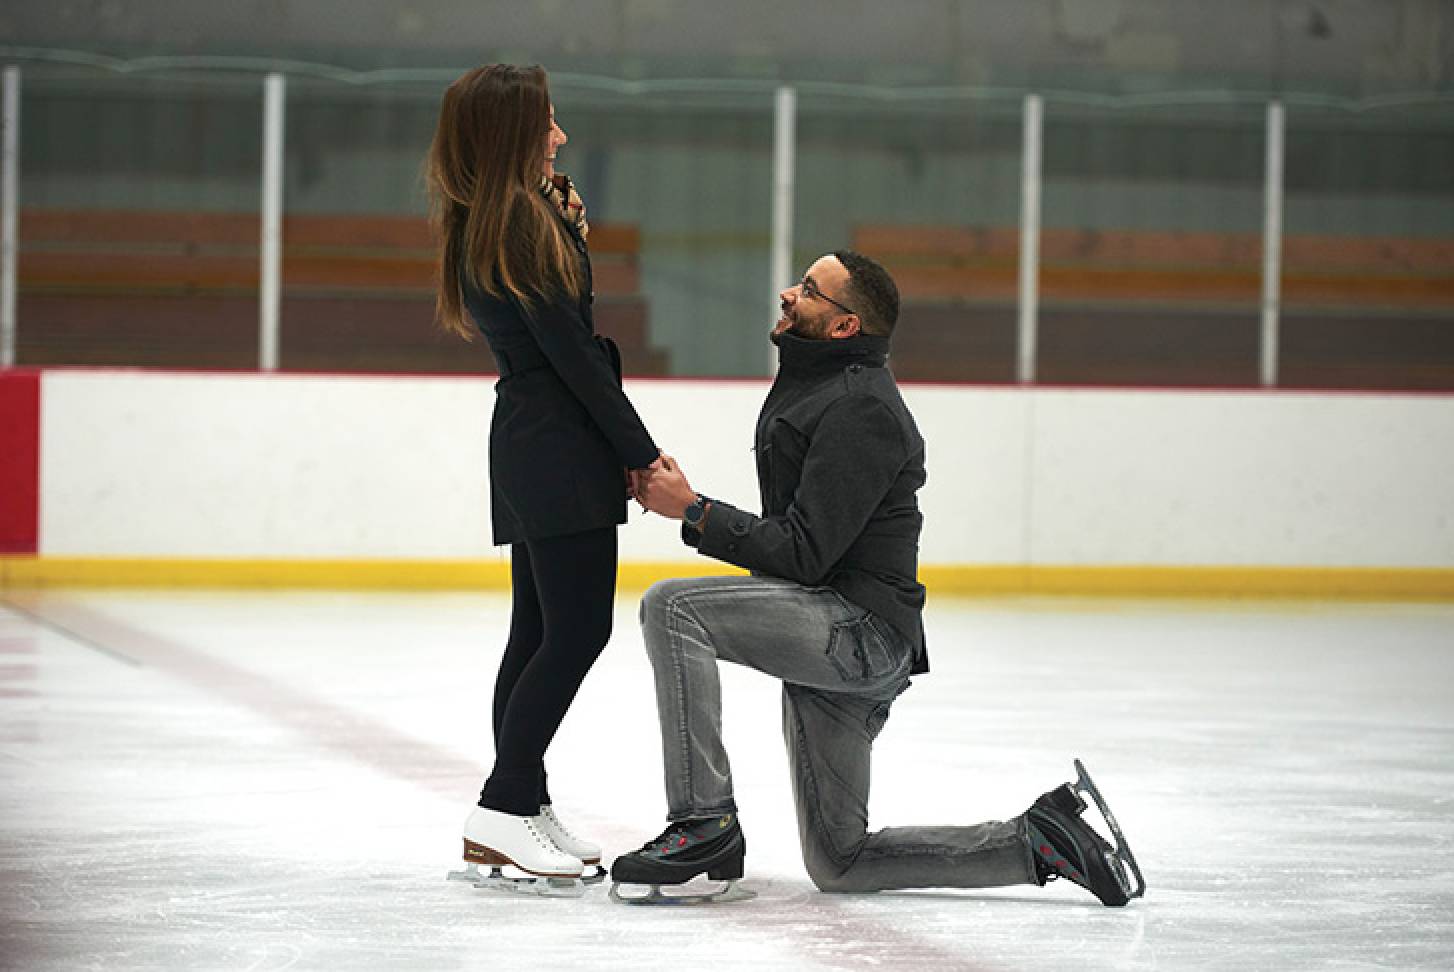 Samuel Atagana and Crystal Richardson get engaged on the ice at Washington Park Ice Arena.